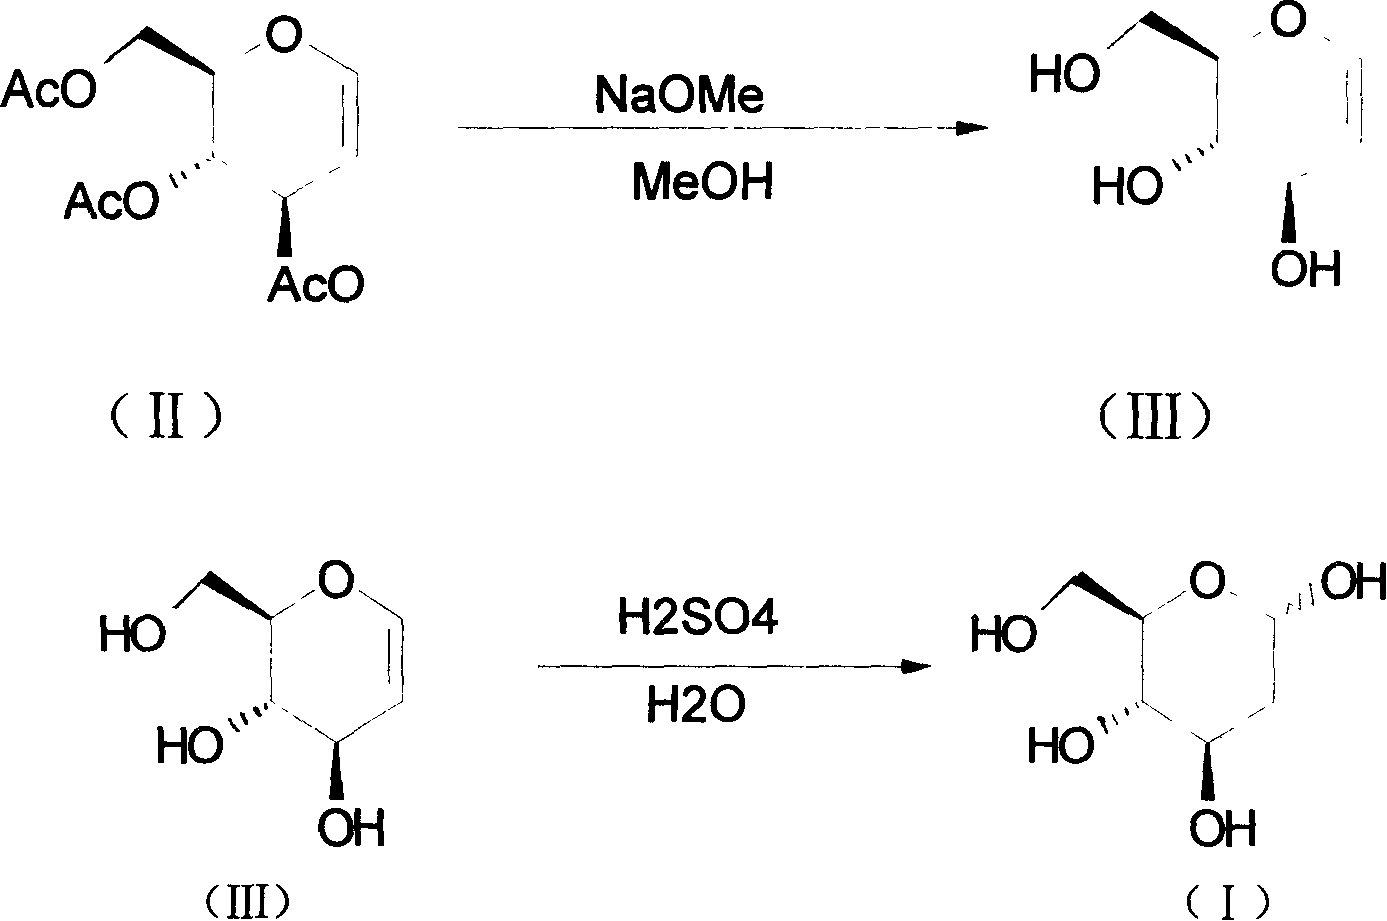 2-deoxidized glucose preparation method